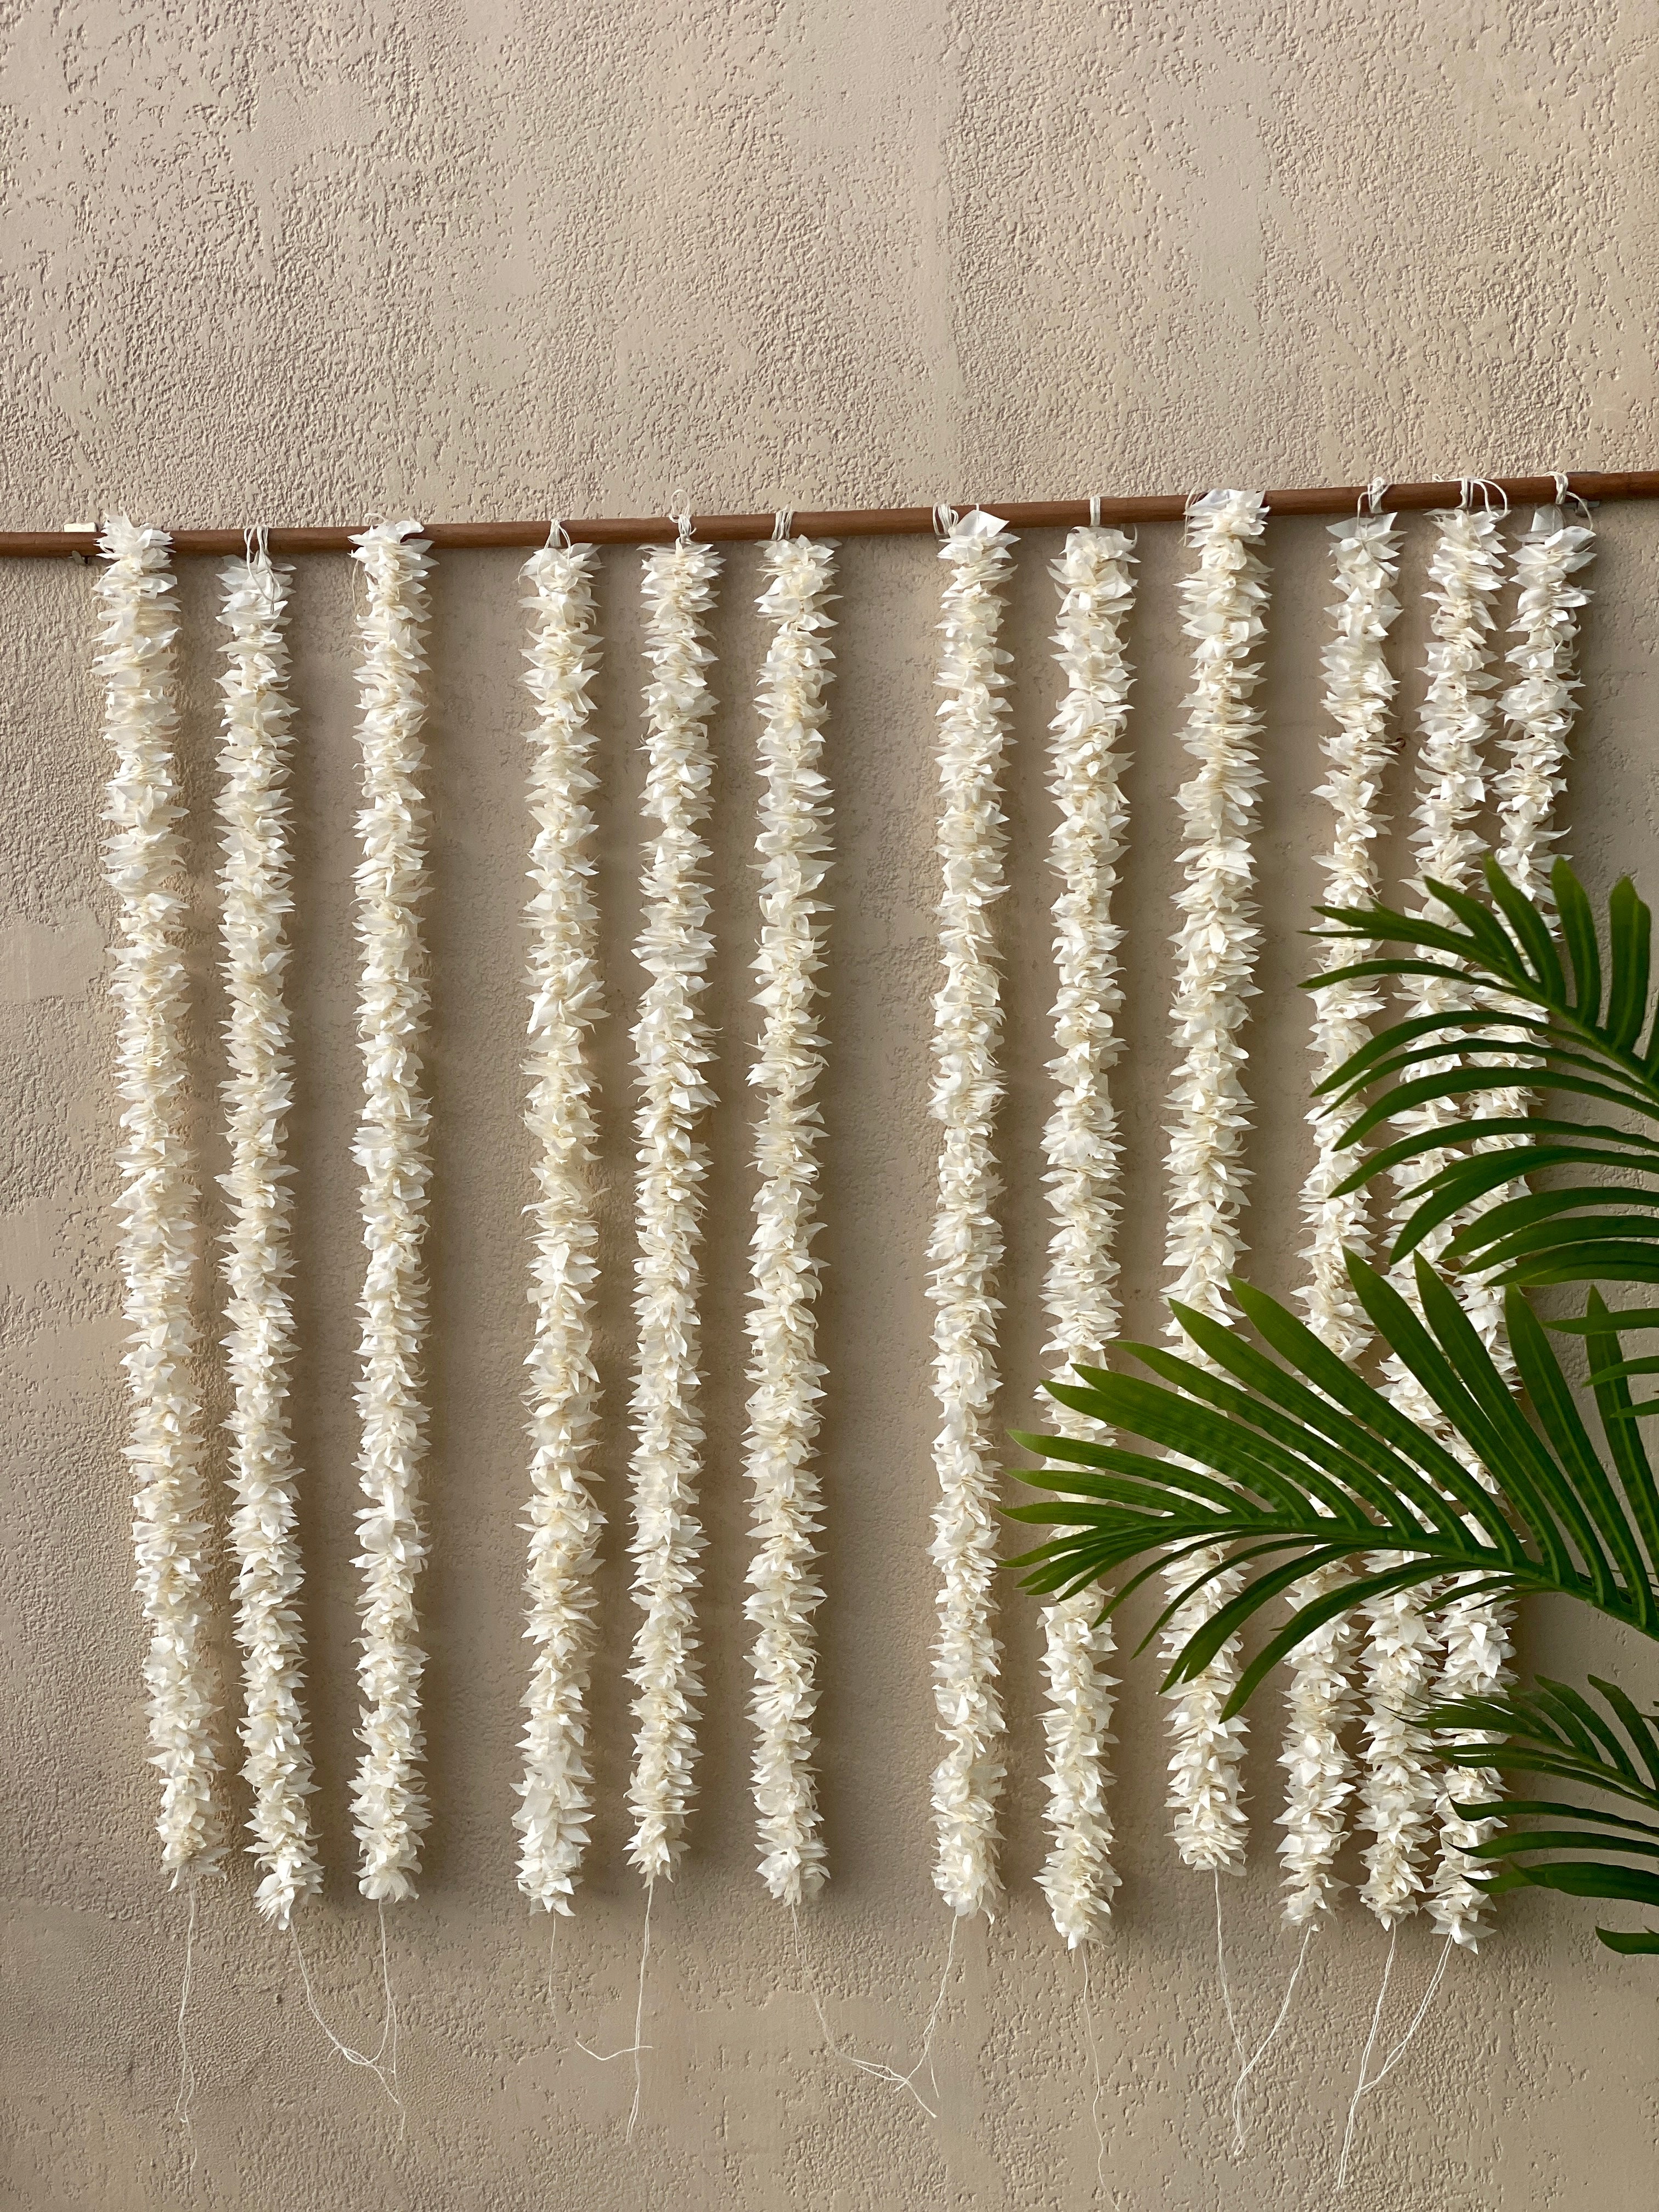 Decorative Artificial White Gajra - Set Of 12 (3 Feet)